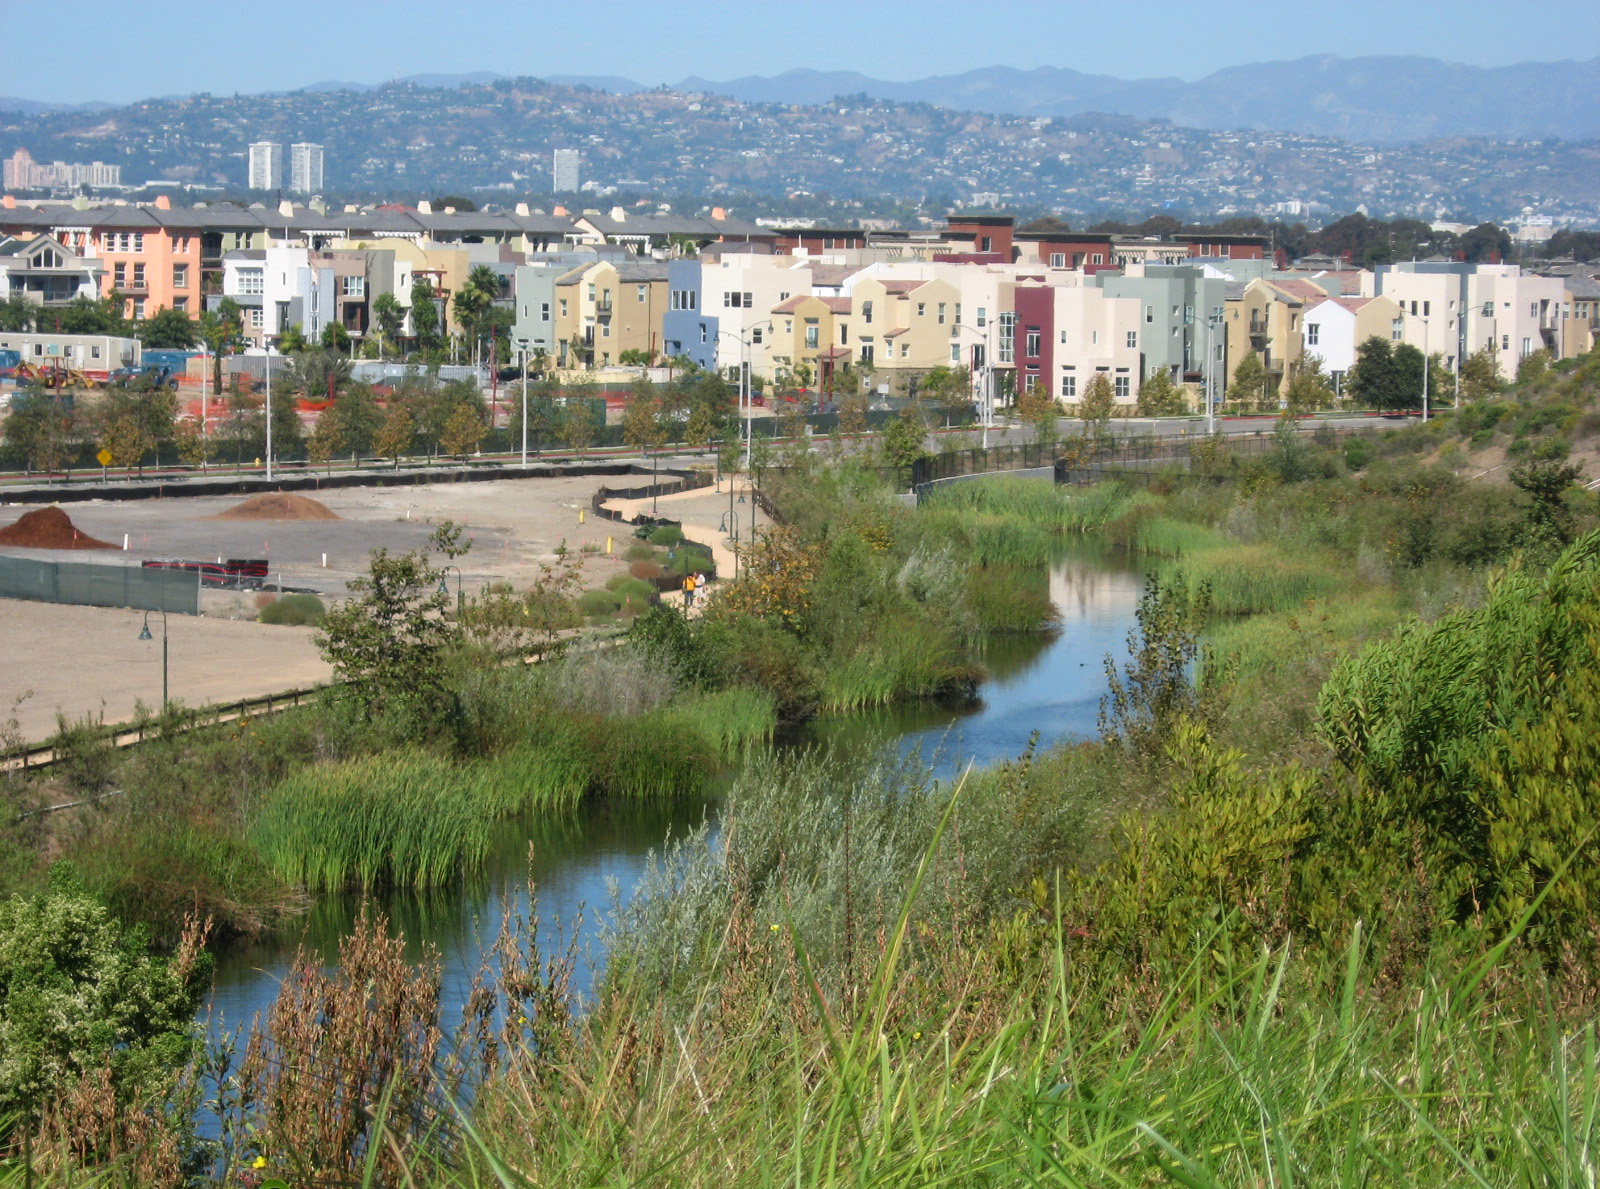 "An urban waterway adjacent to housing"